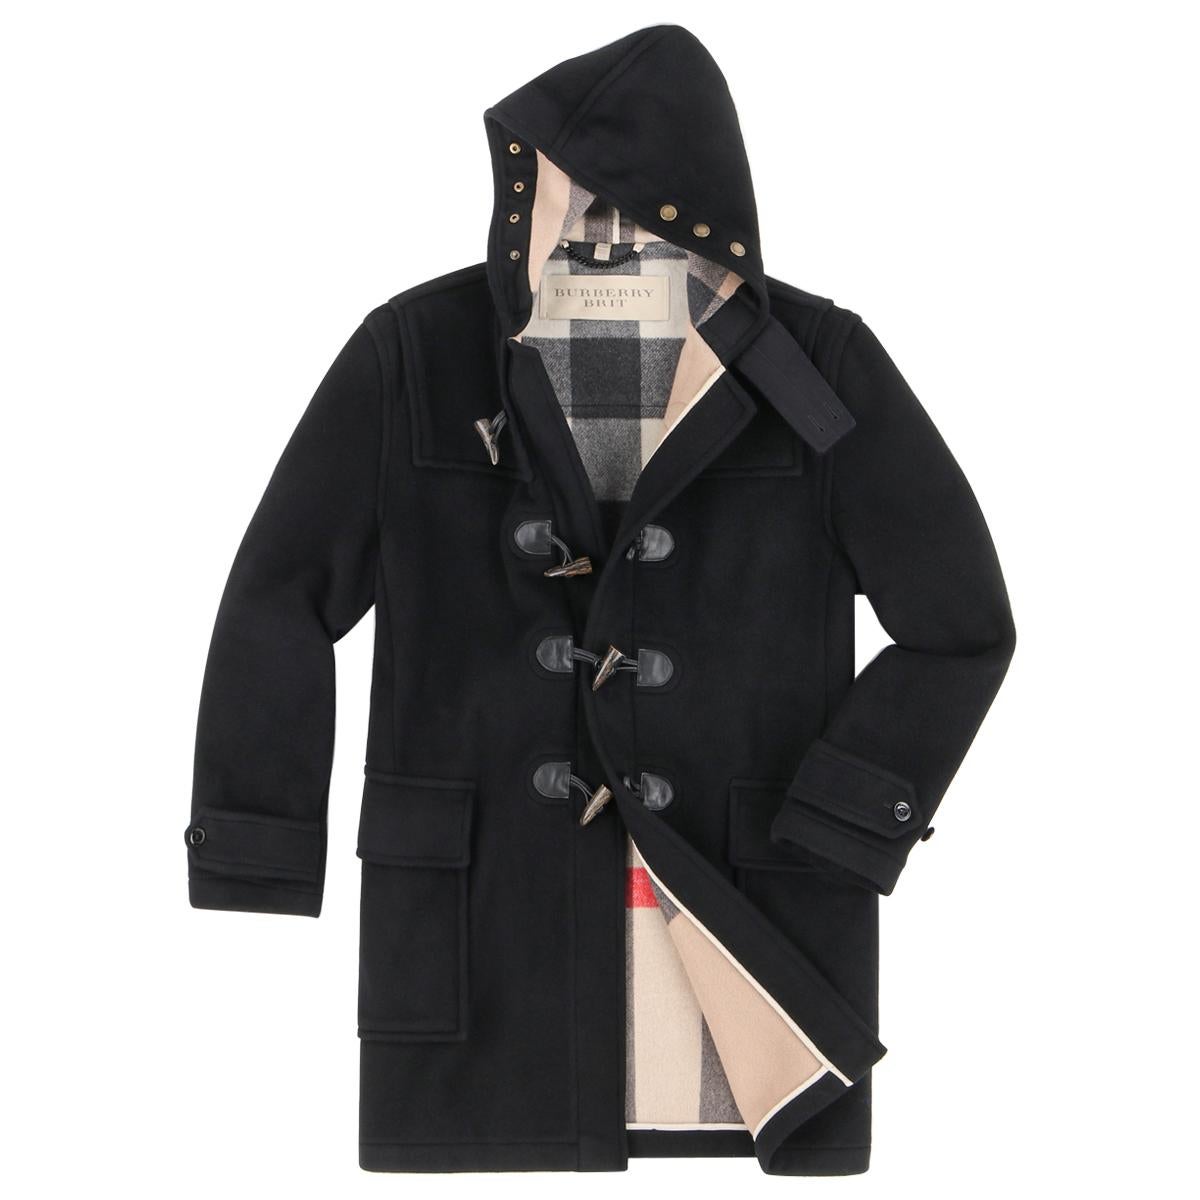 BURBERRY Brit A/W 2013 “Broadhurst” Men's Black Toggle Hooded Duffle Coat Jacket